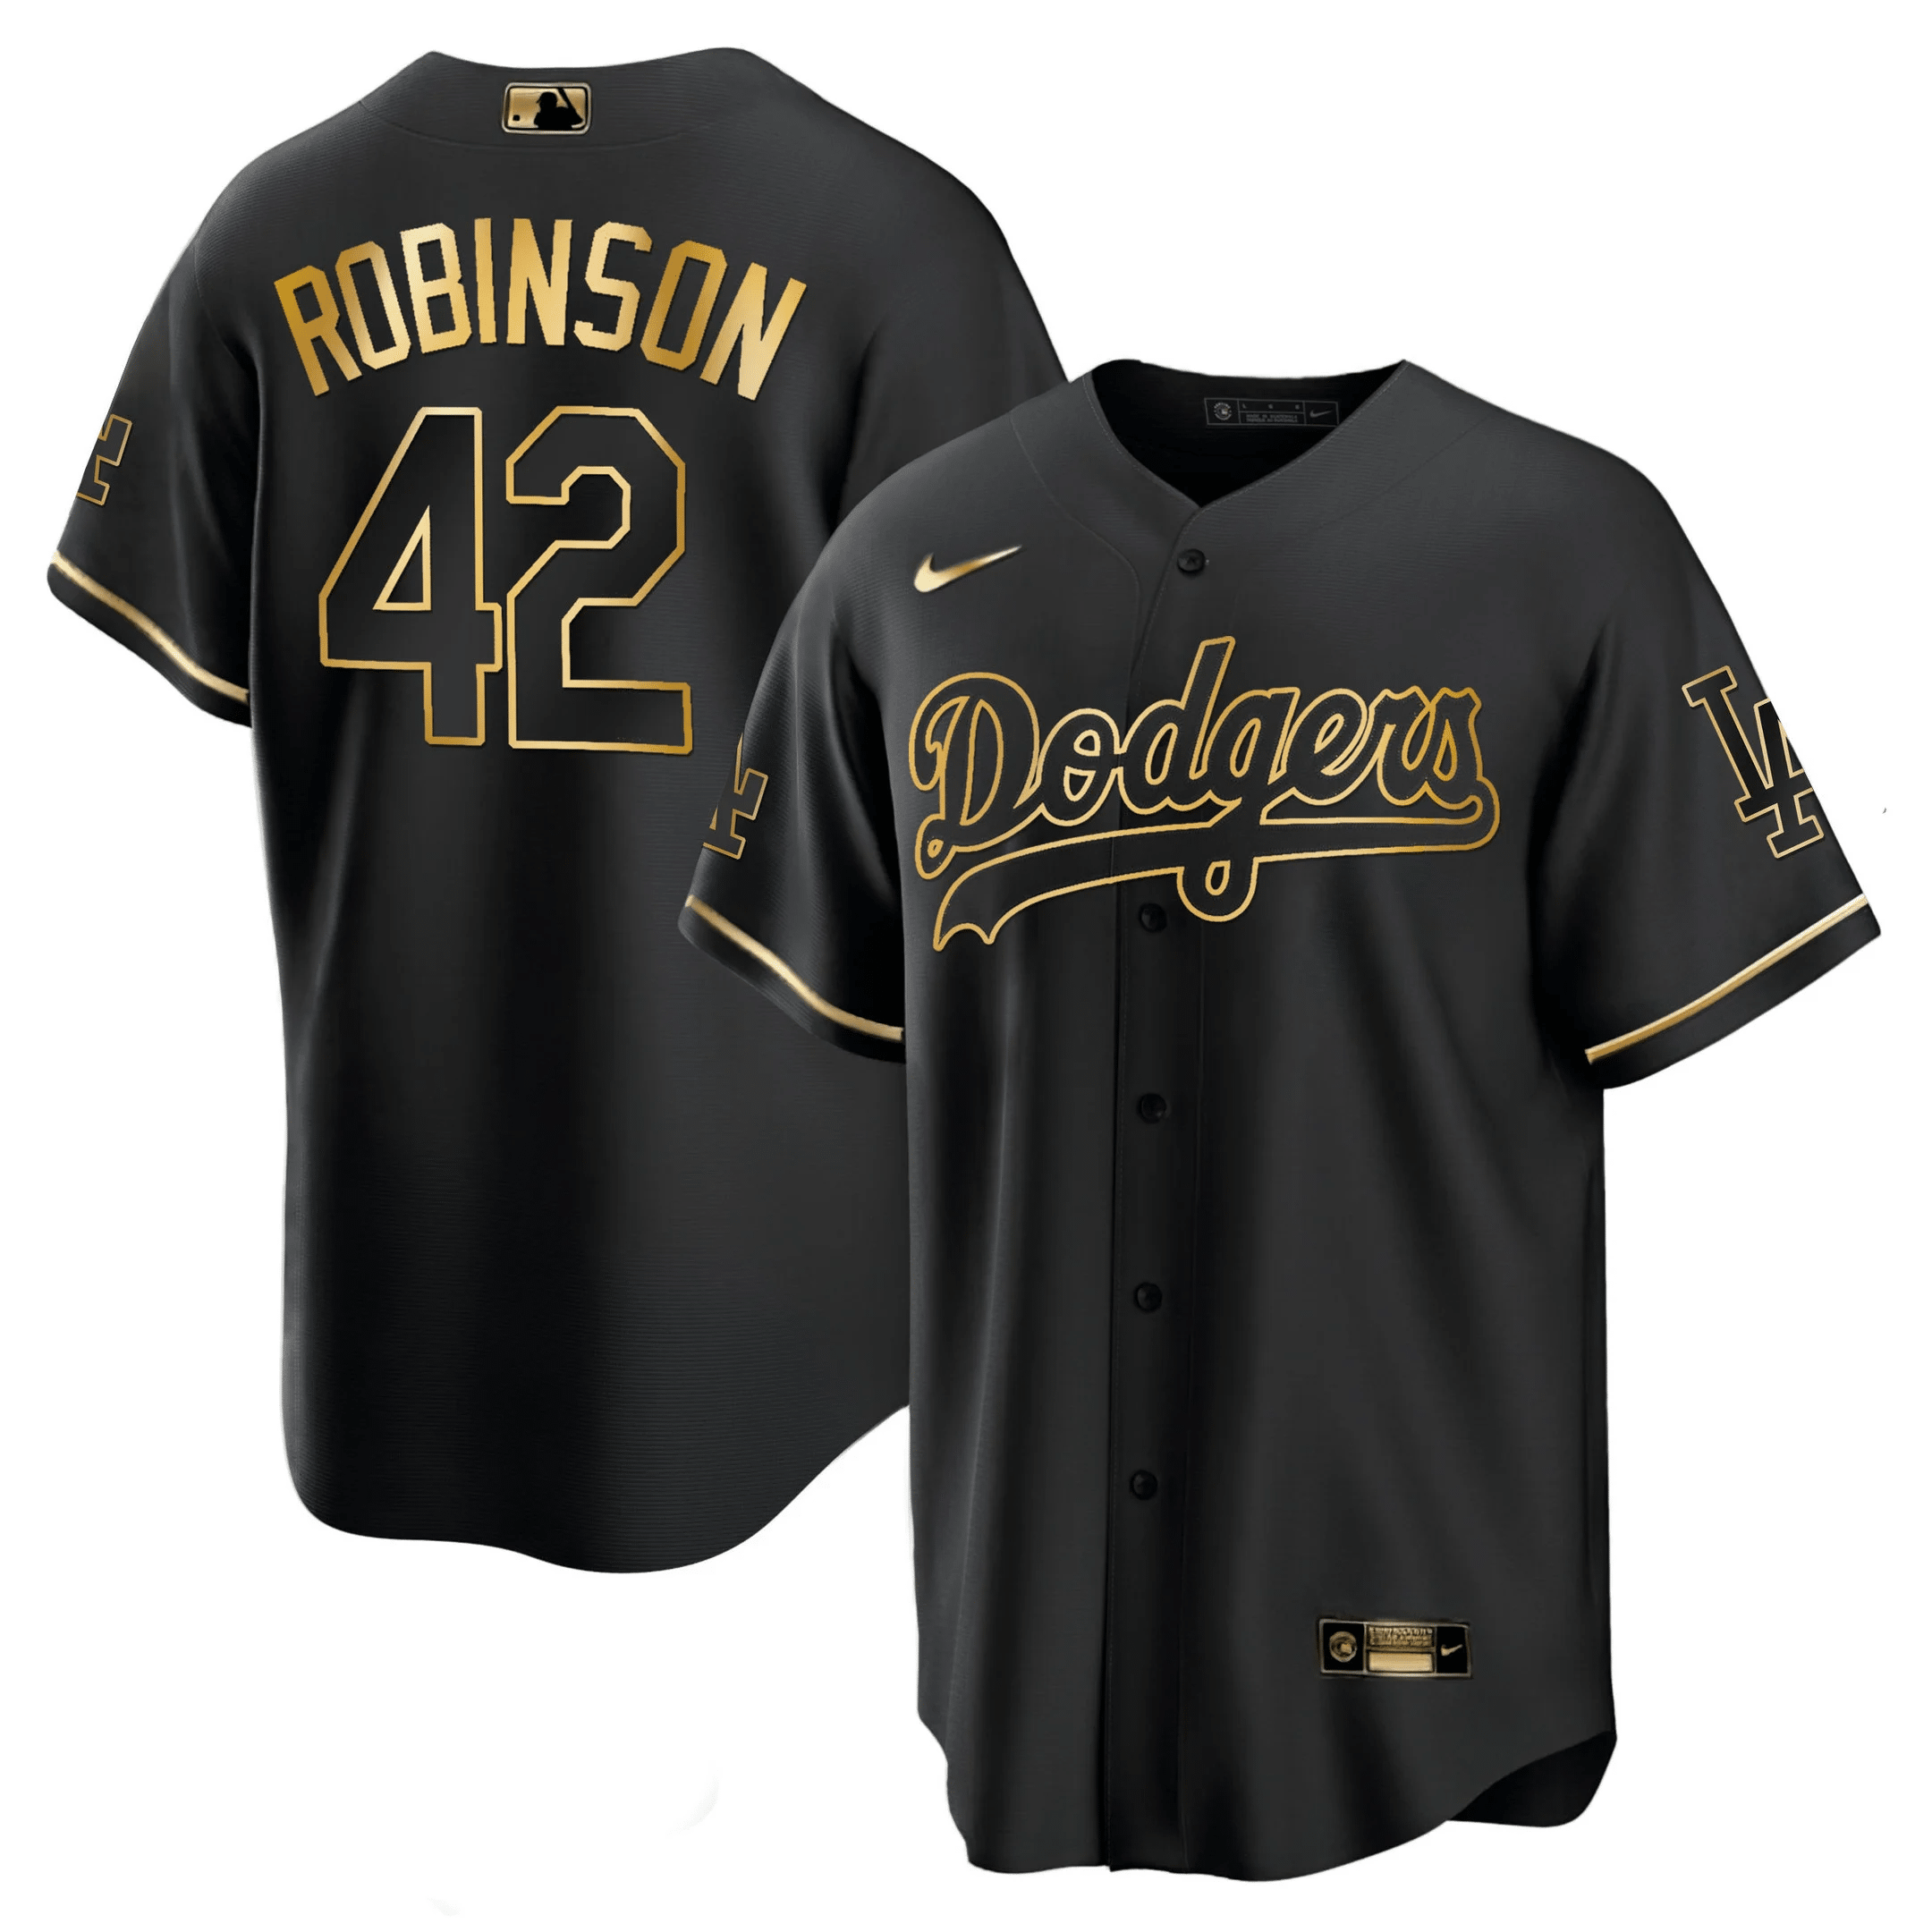 robinson baseball uniform